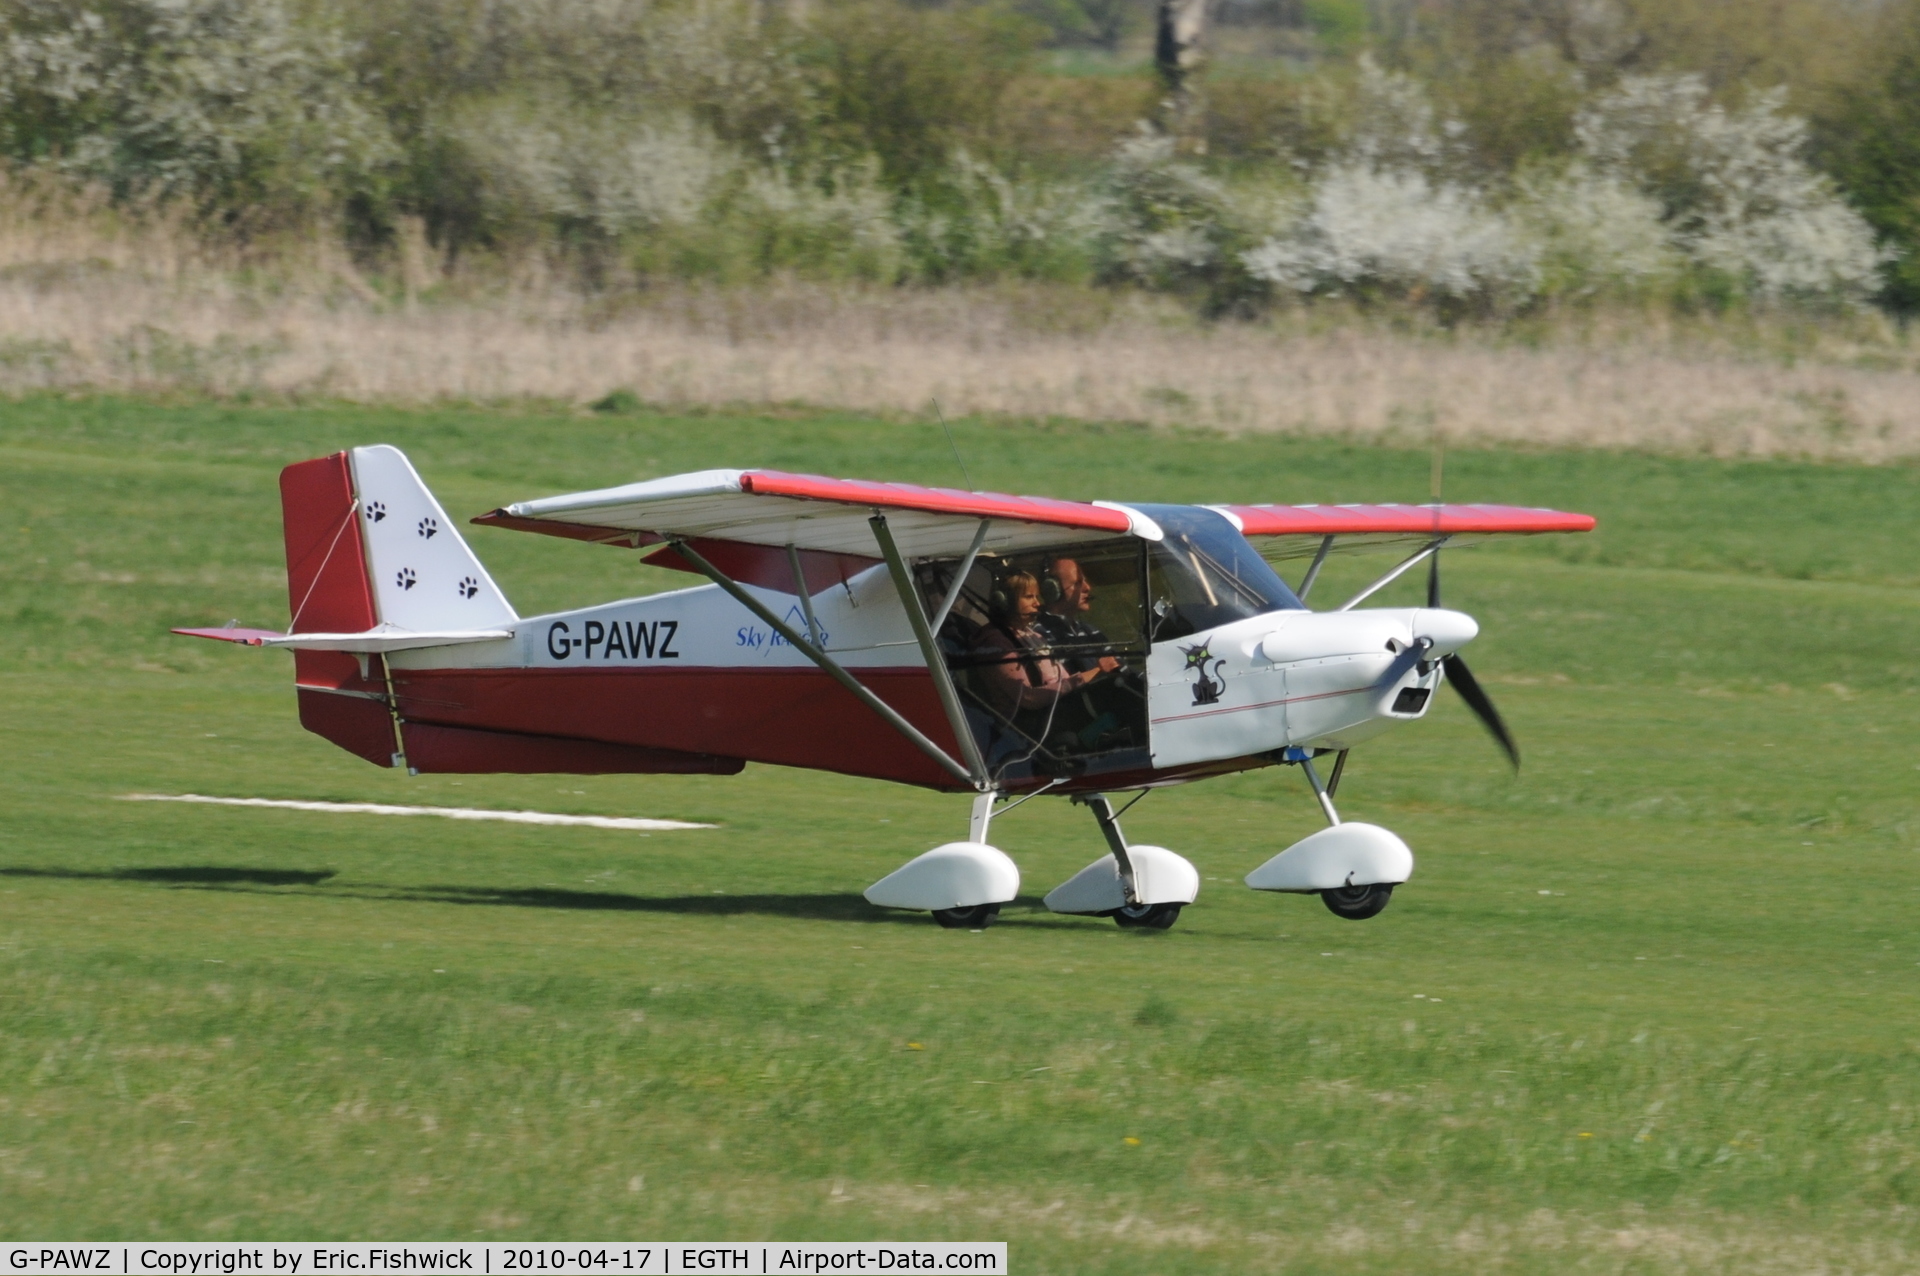 G-PAWZ, 2007 Skyranger Swift 912S(1) C/N BMAA/HB/528, G-PAWZ departing Shuttleworth (Old Warden) Aerodrome.